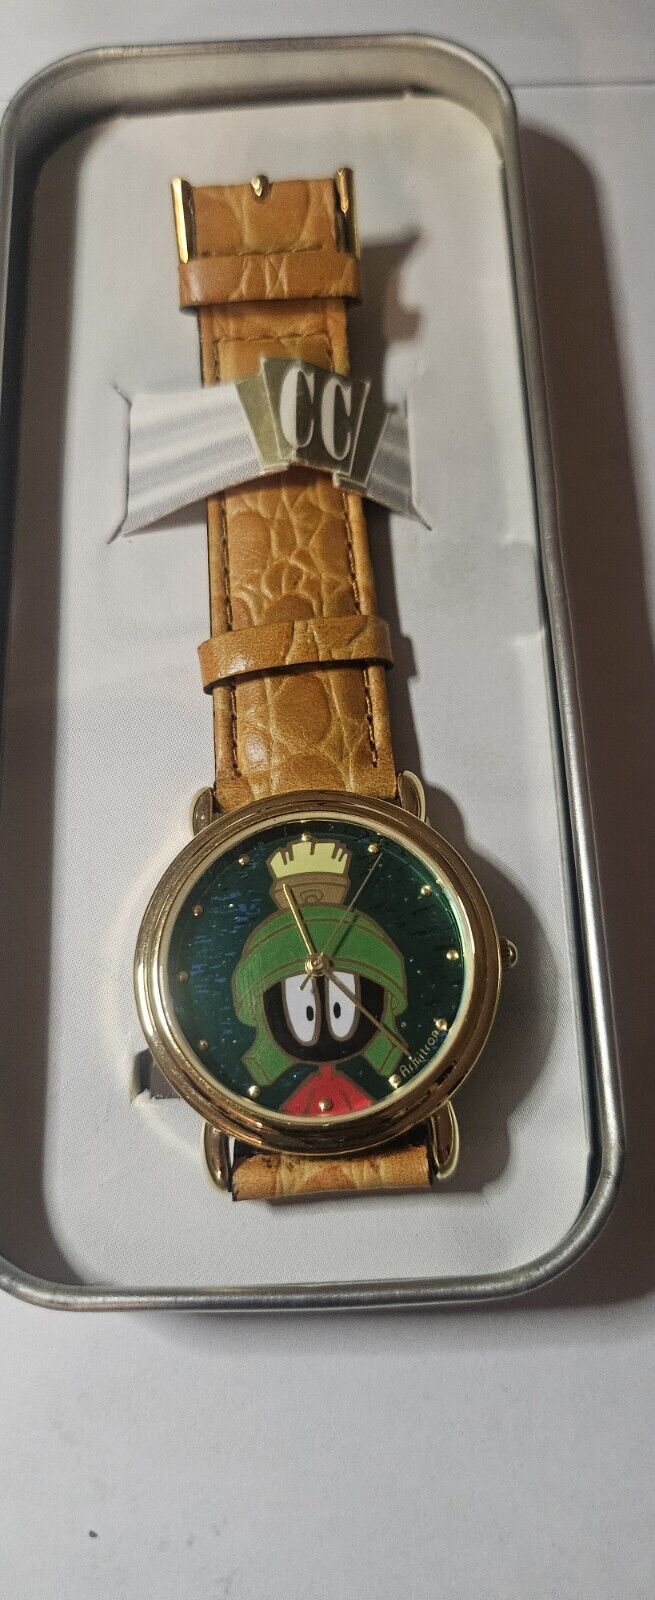 1994 Armitron Marvin The Martian Watch